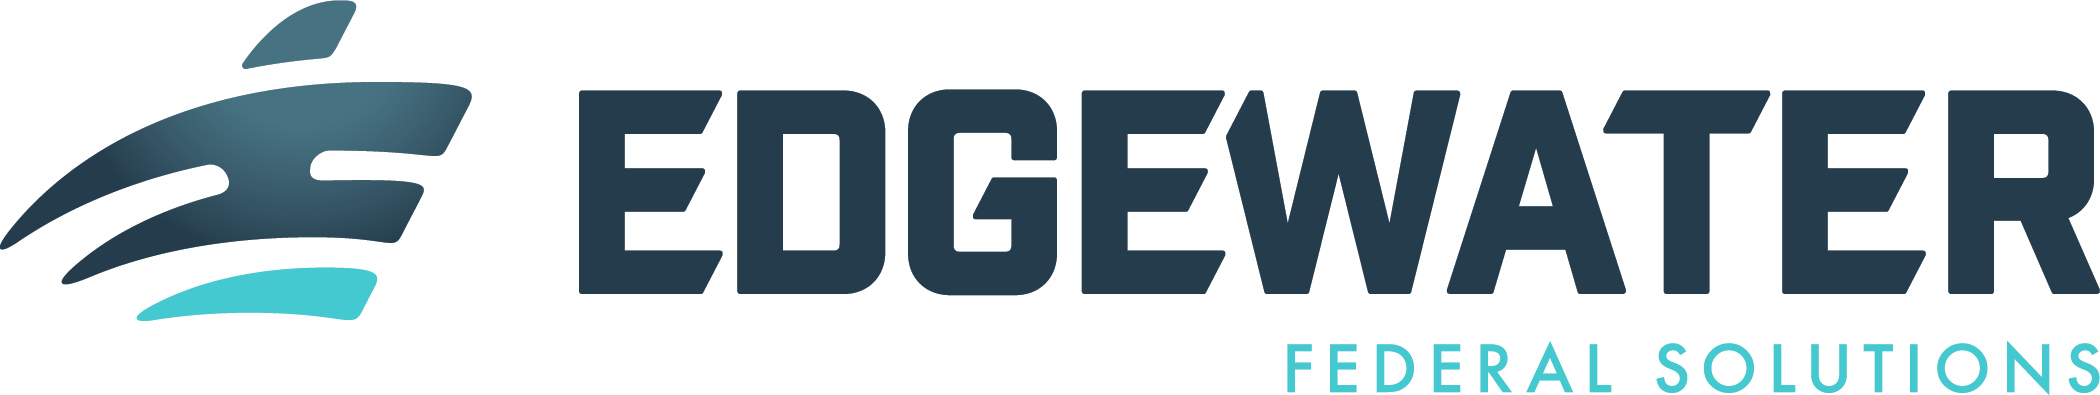 Edgewater Sponsor Logo